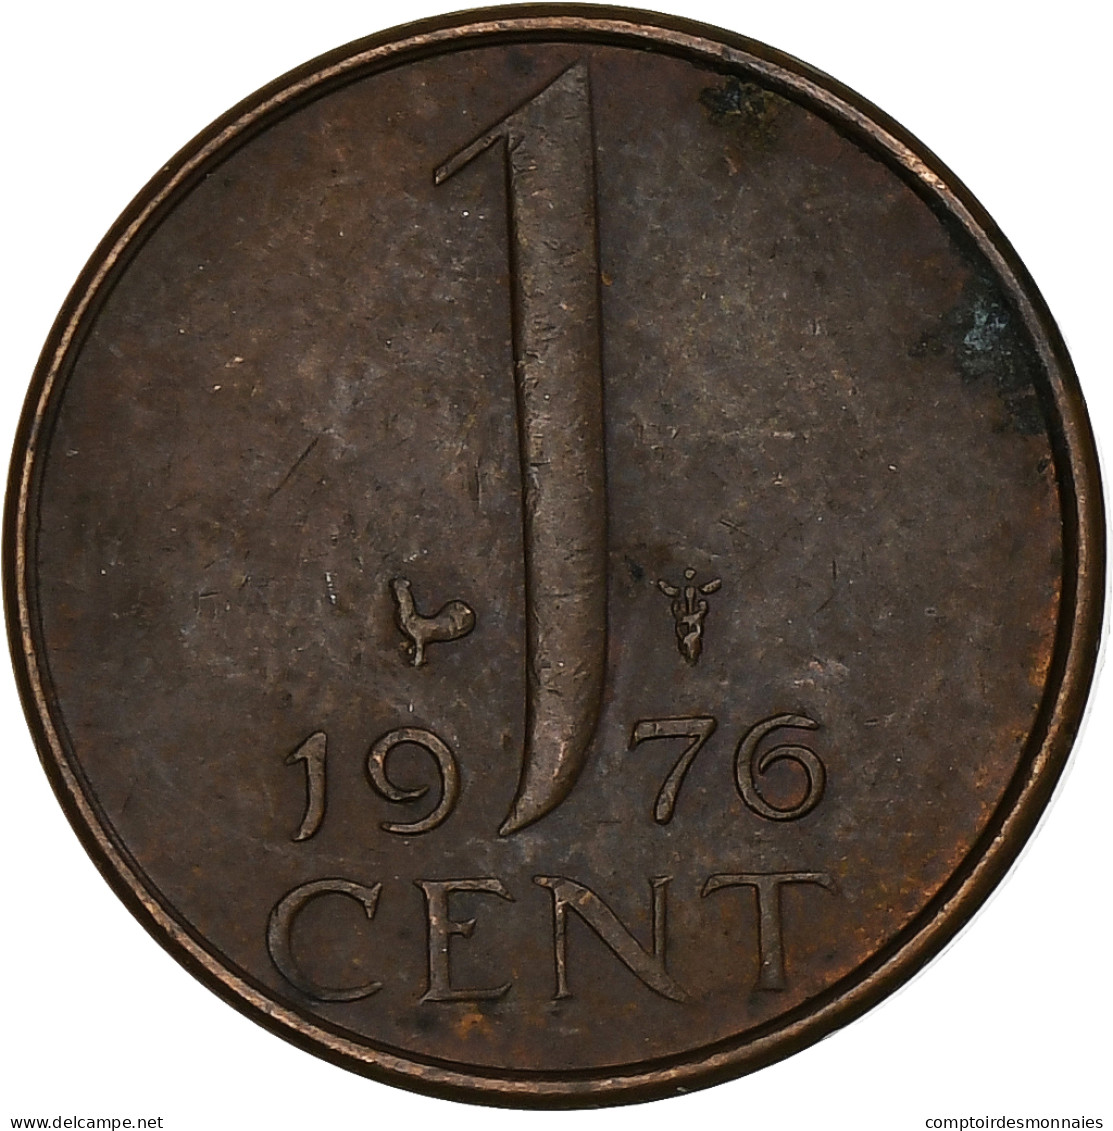 Pays-Bas, Cent, 1976 - 1948-1980 : Juliana